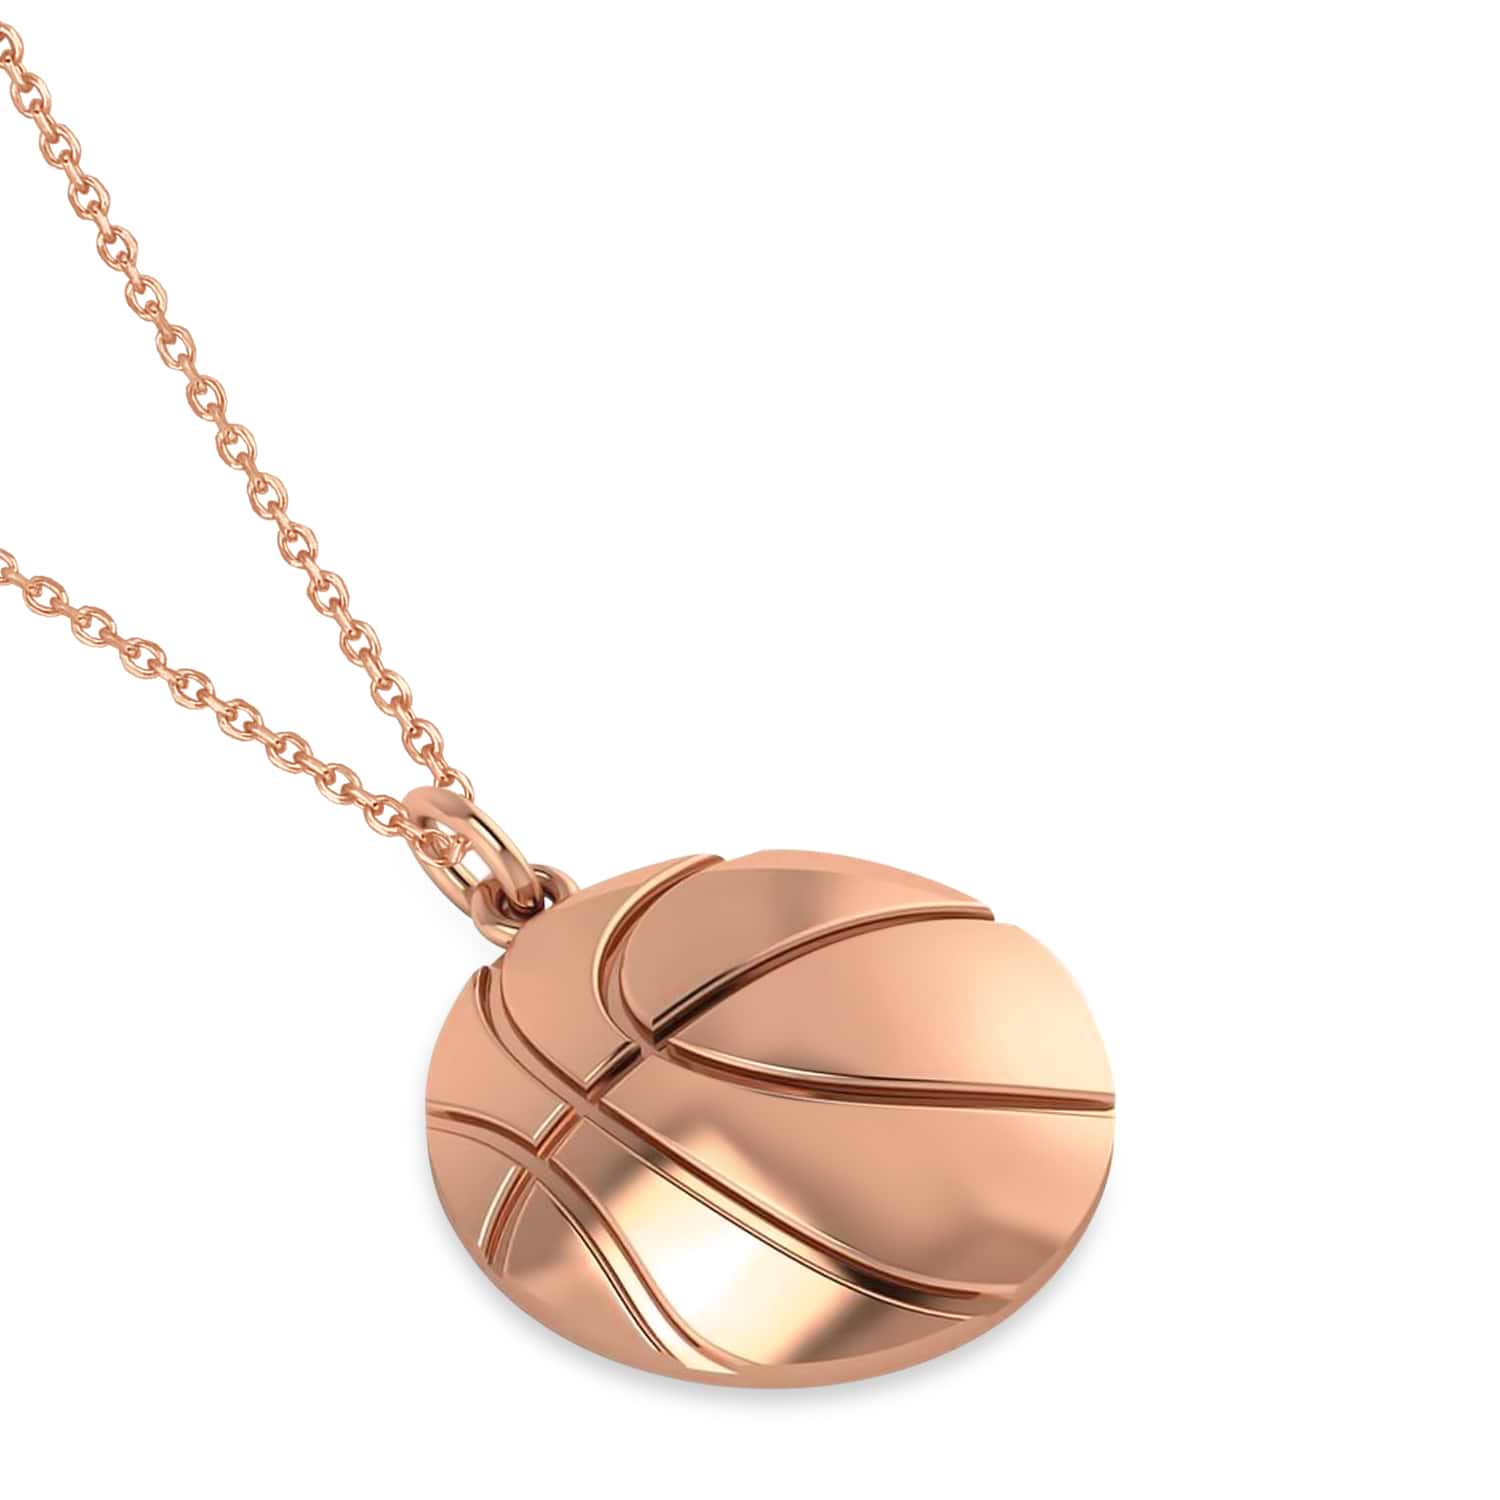 Basketball Charm Men's Pendant Necklace 14K Rose Gold